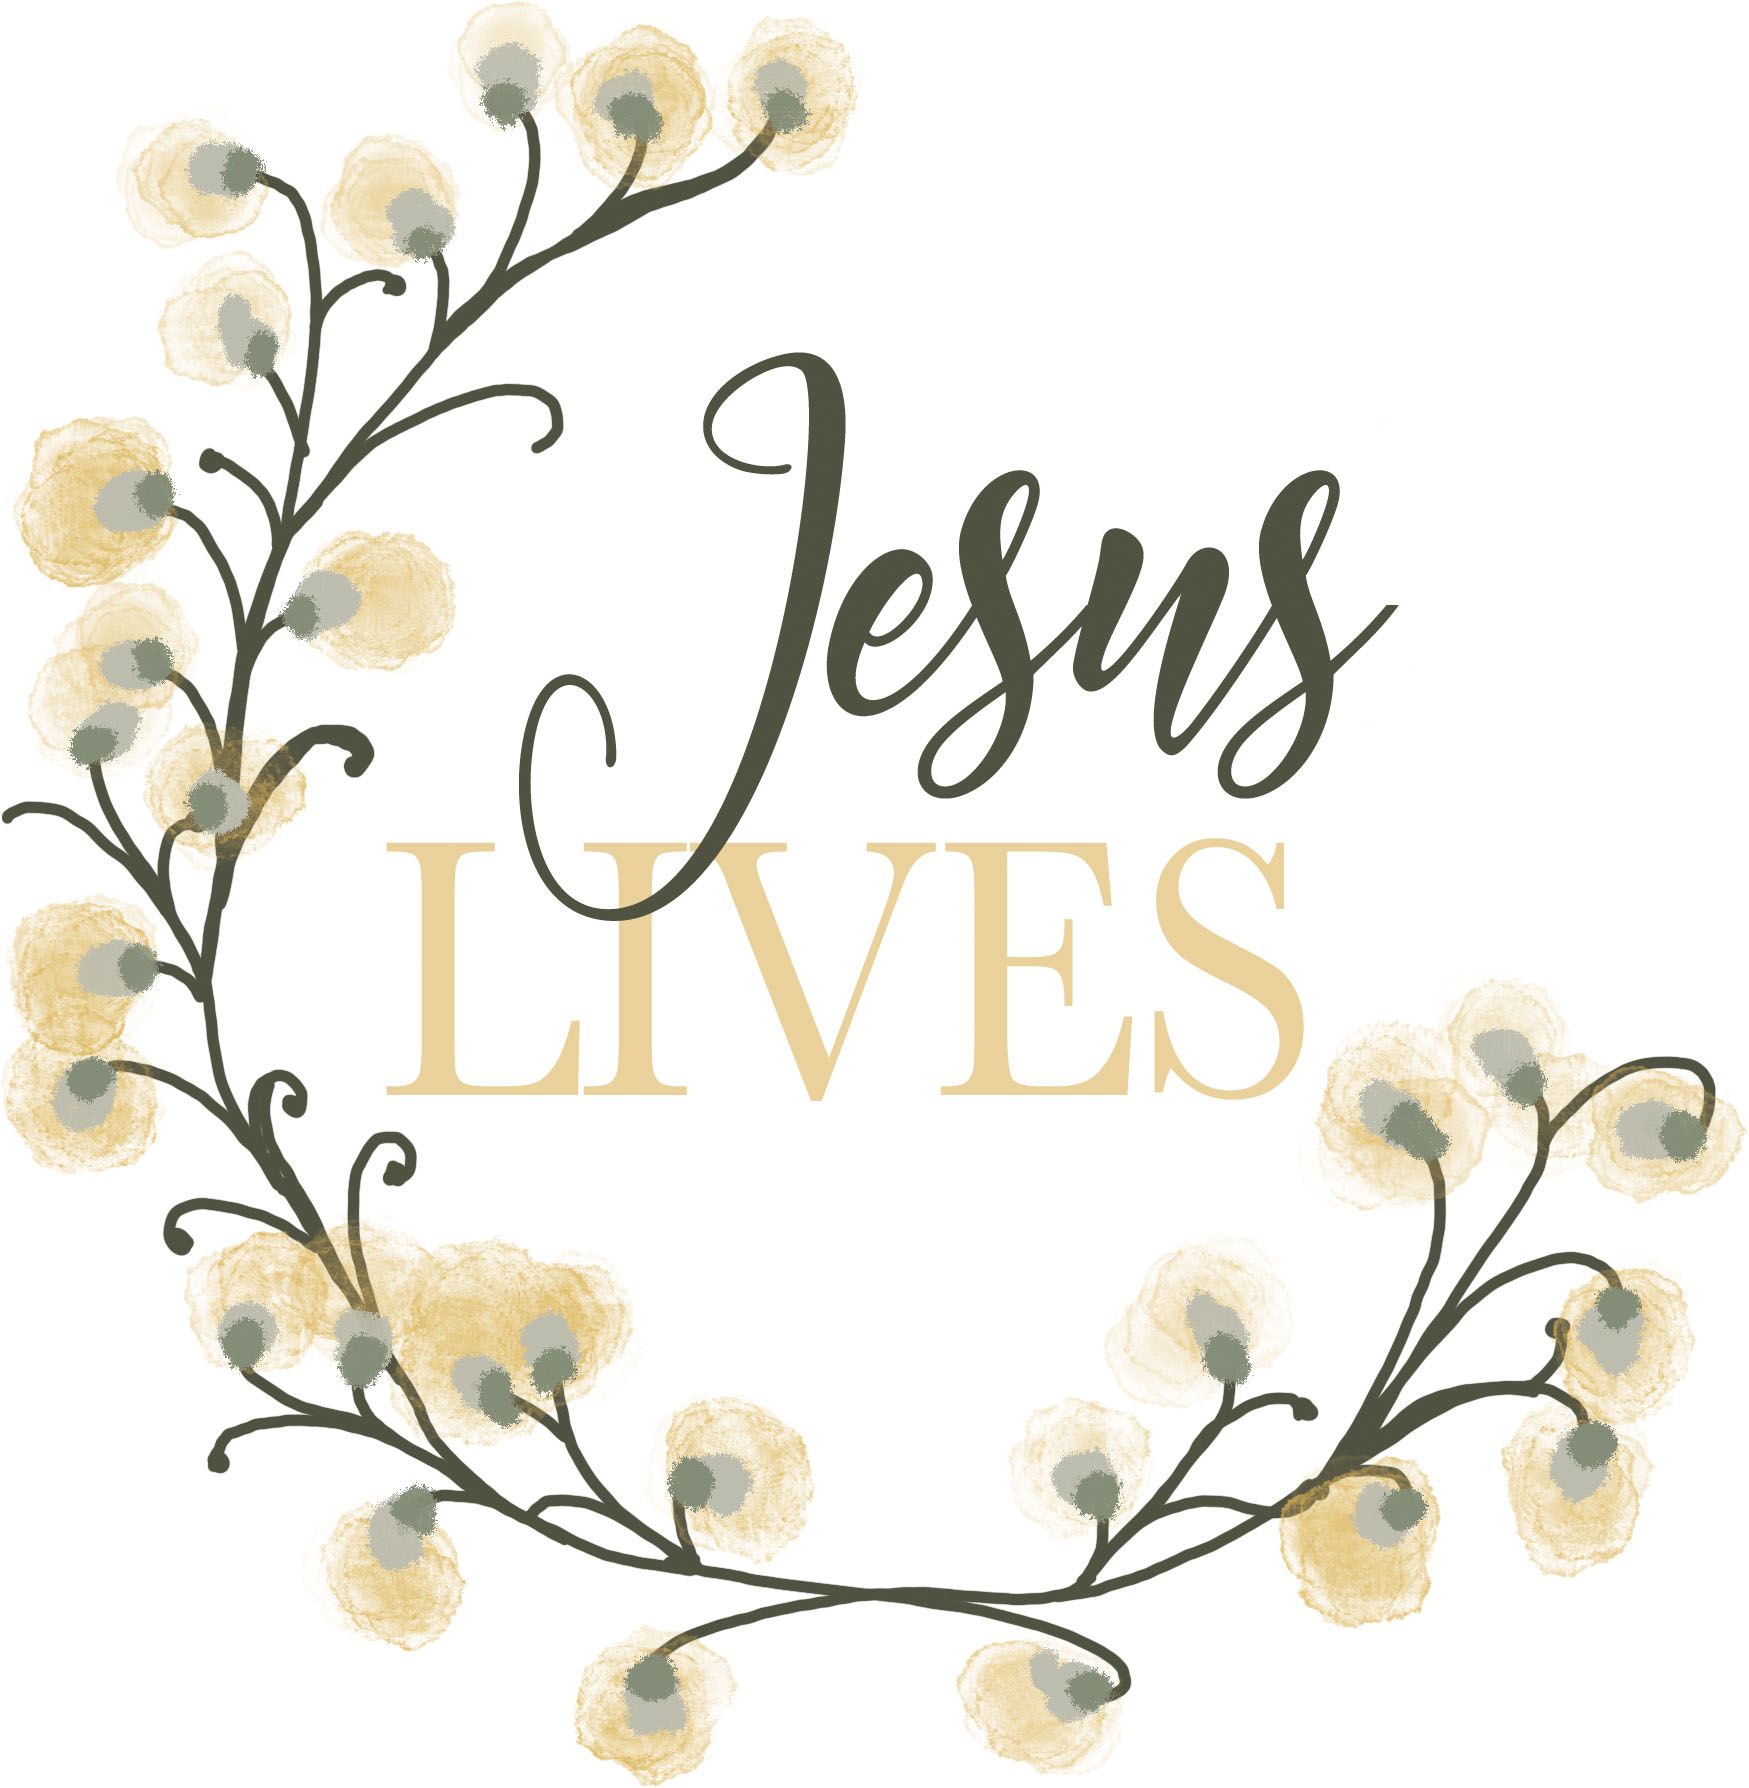 Graphic says Jesus lives